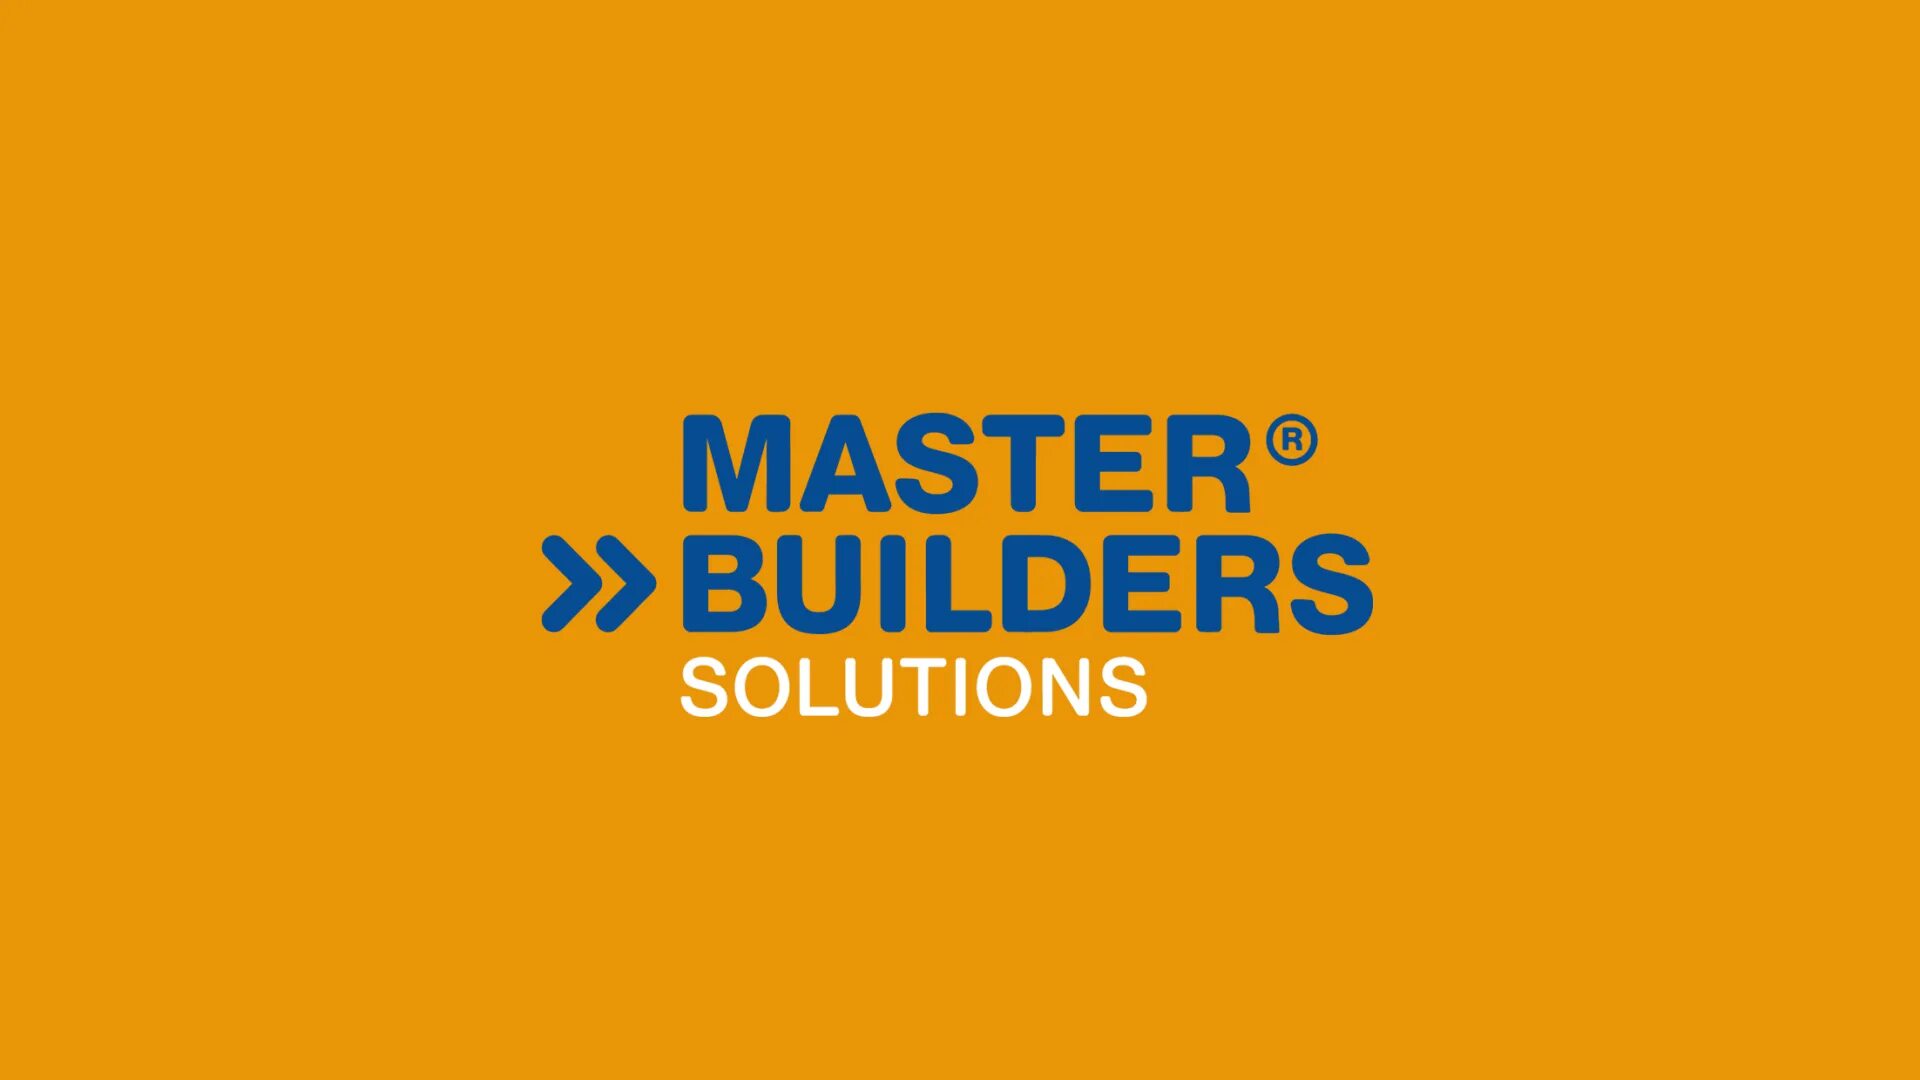 Master builders. Master Builders solutions. Master Builders solutions logo. Master Builders solutions Россия. Master Builders solutions Россия логотип.